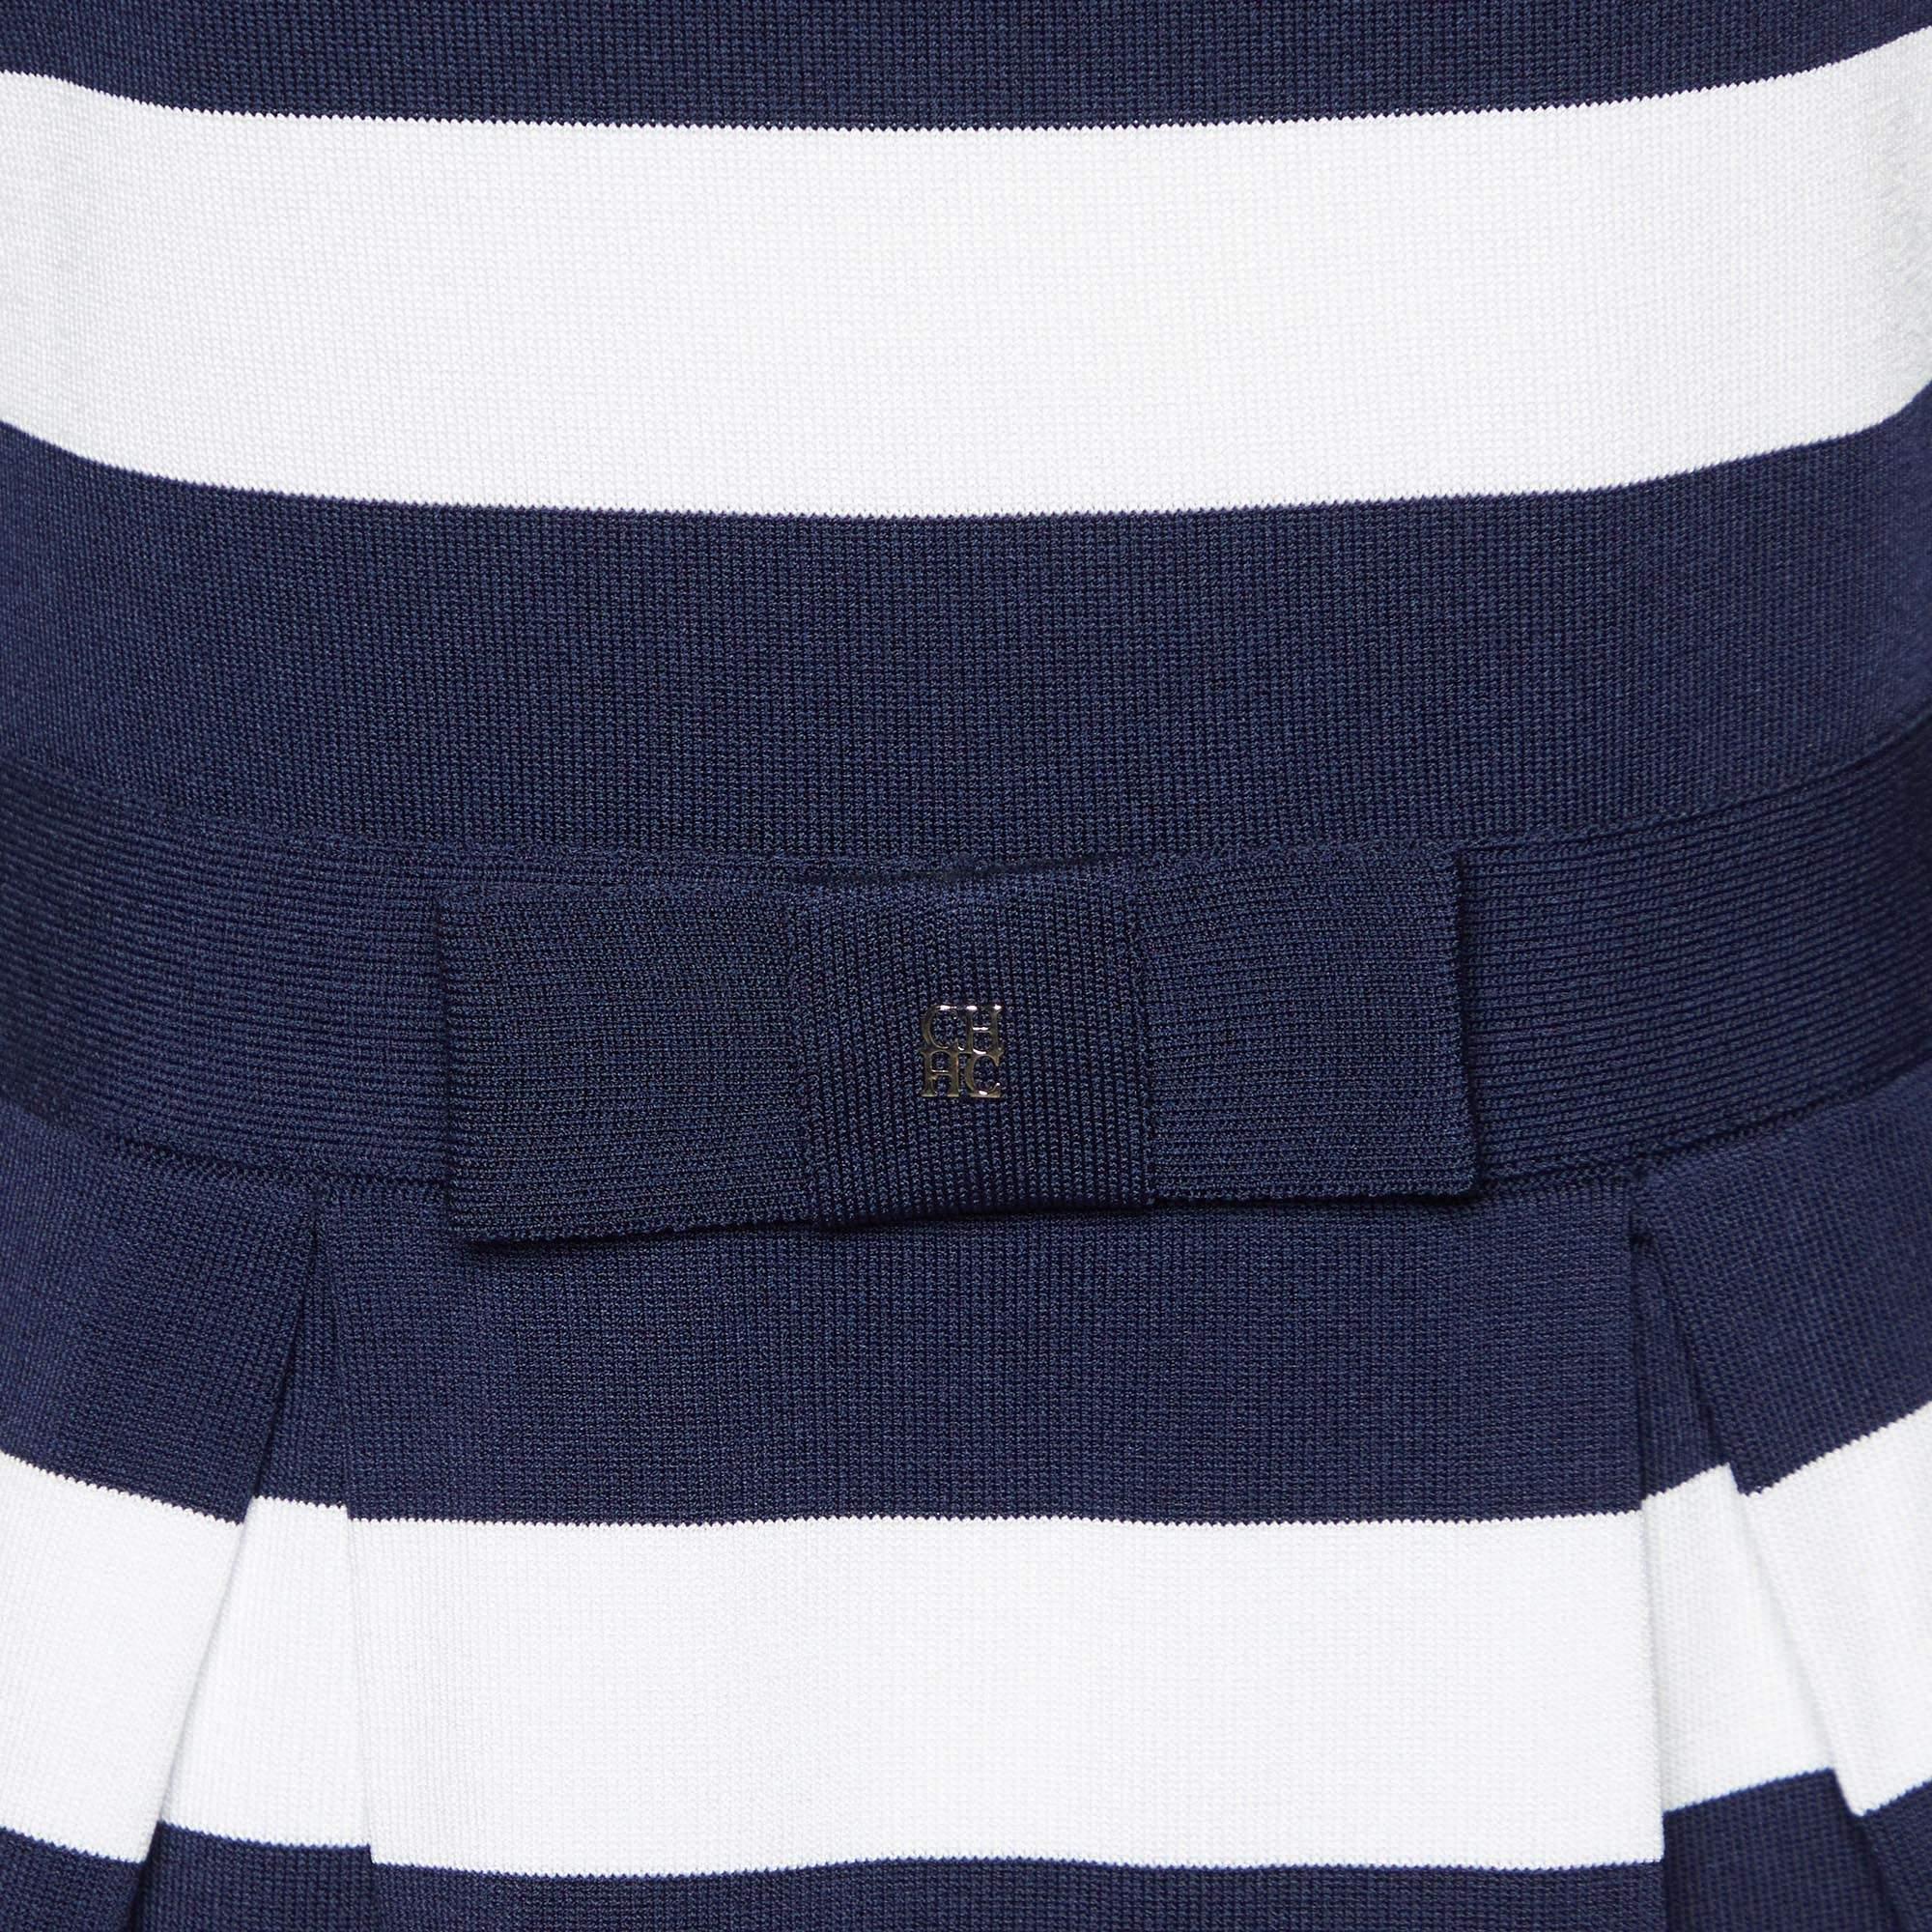 CH Carolina Herrera Navy Blue/White Striped Knit Peplum Top S 2